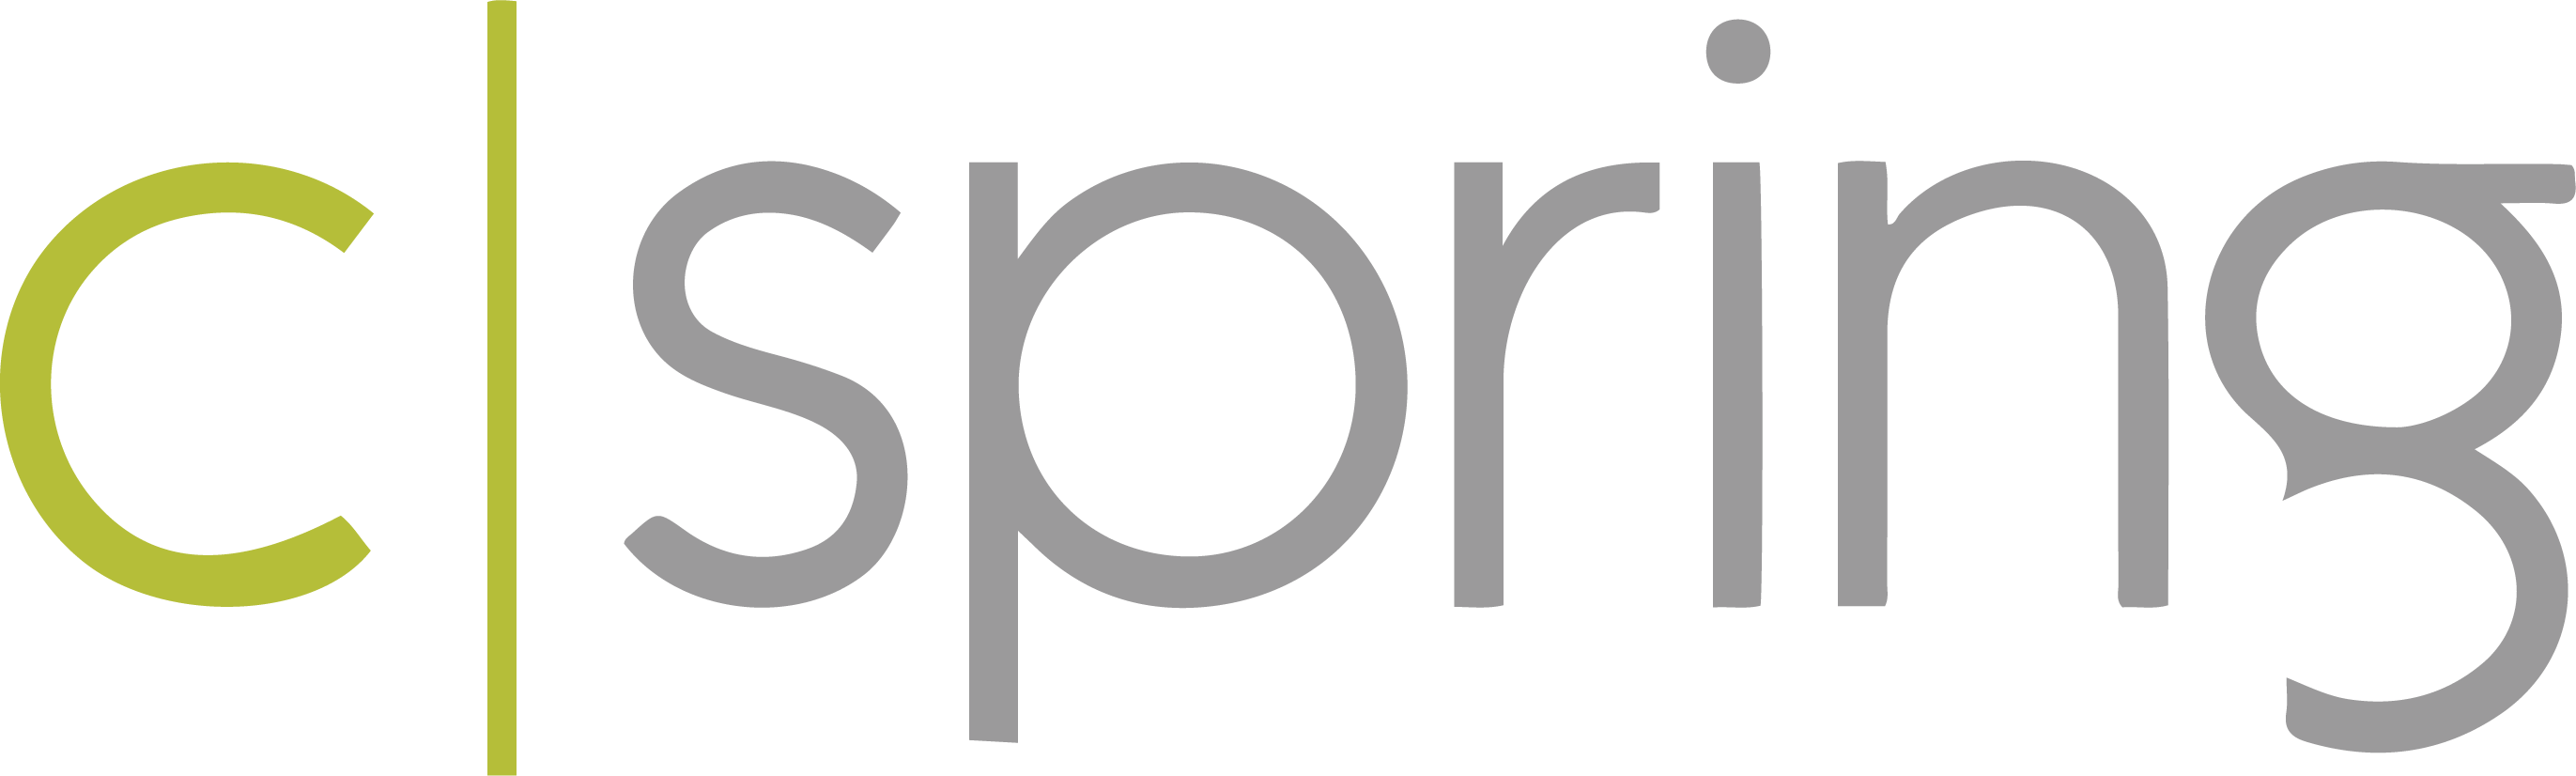 CSpring Company Logo